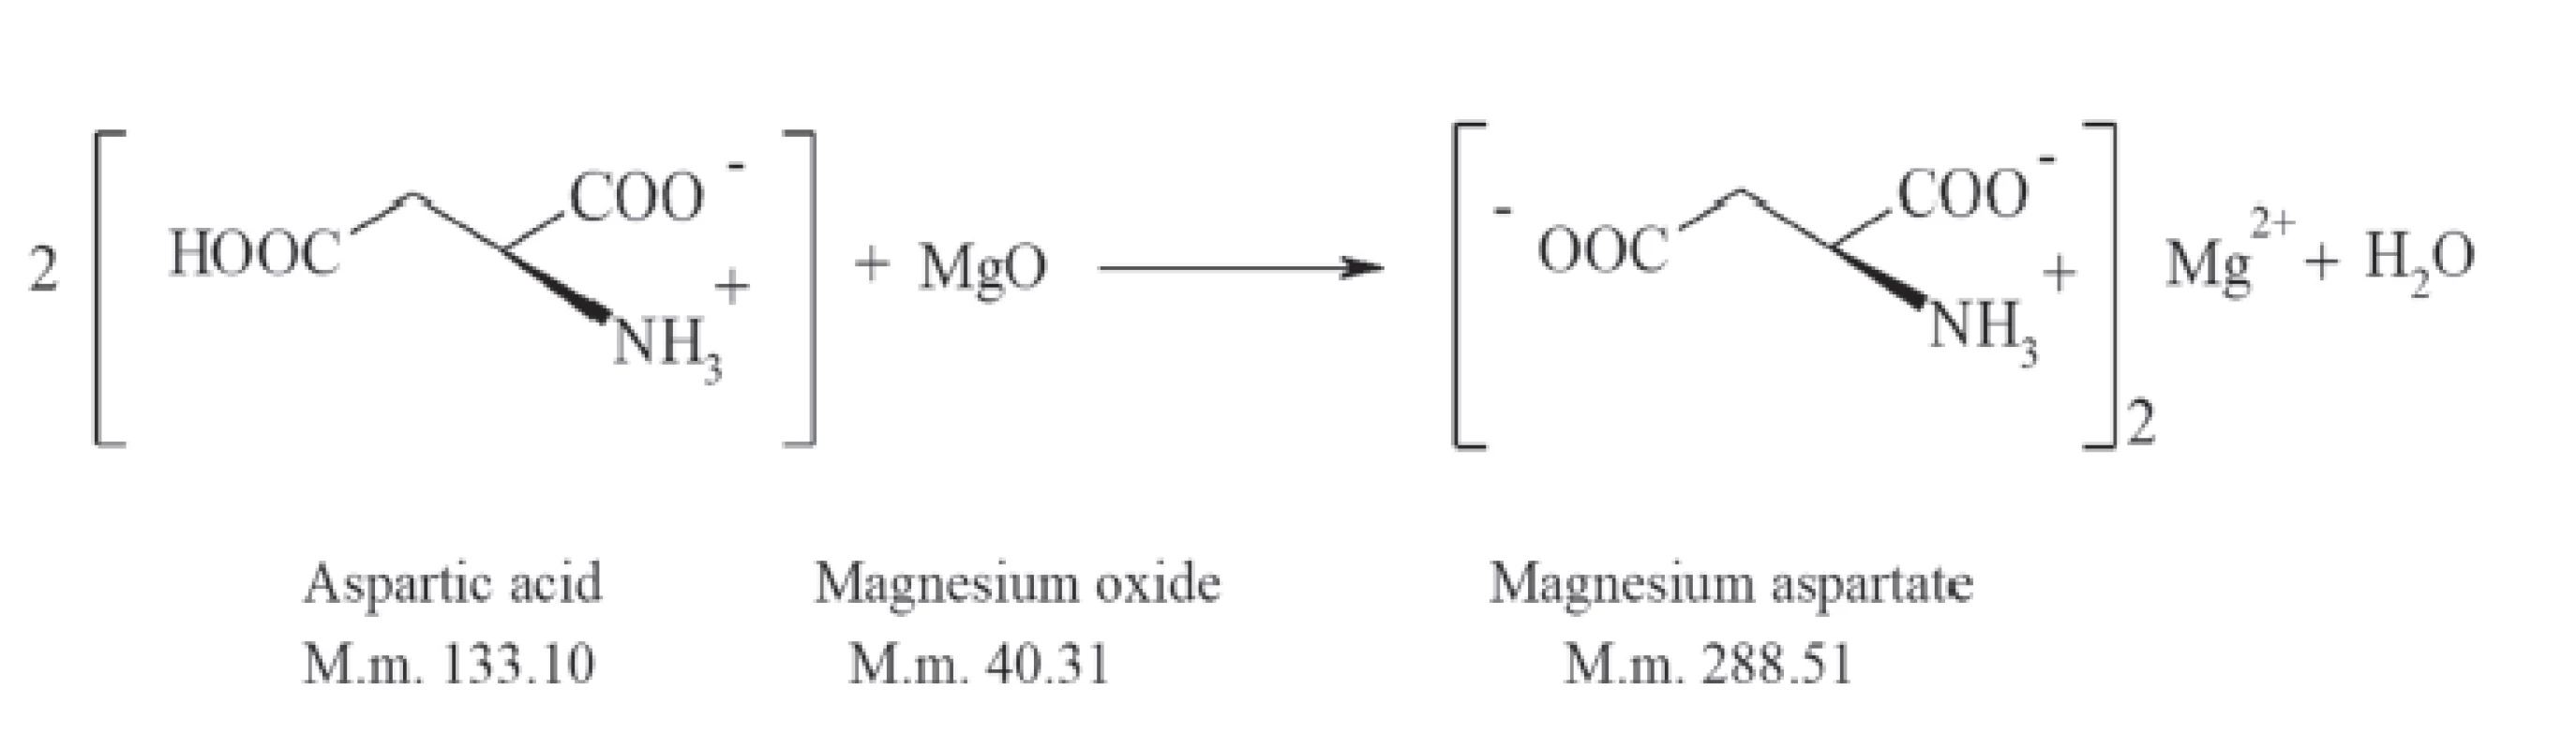 The reaction of magnesium aspartate obtaining